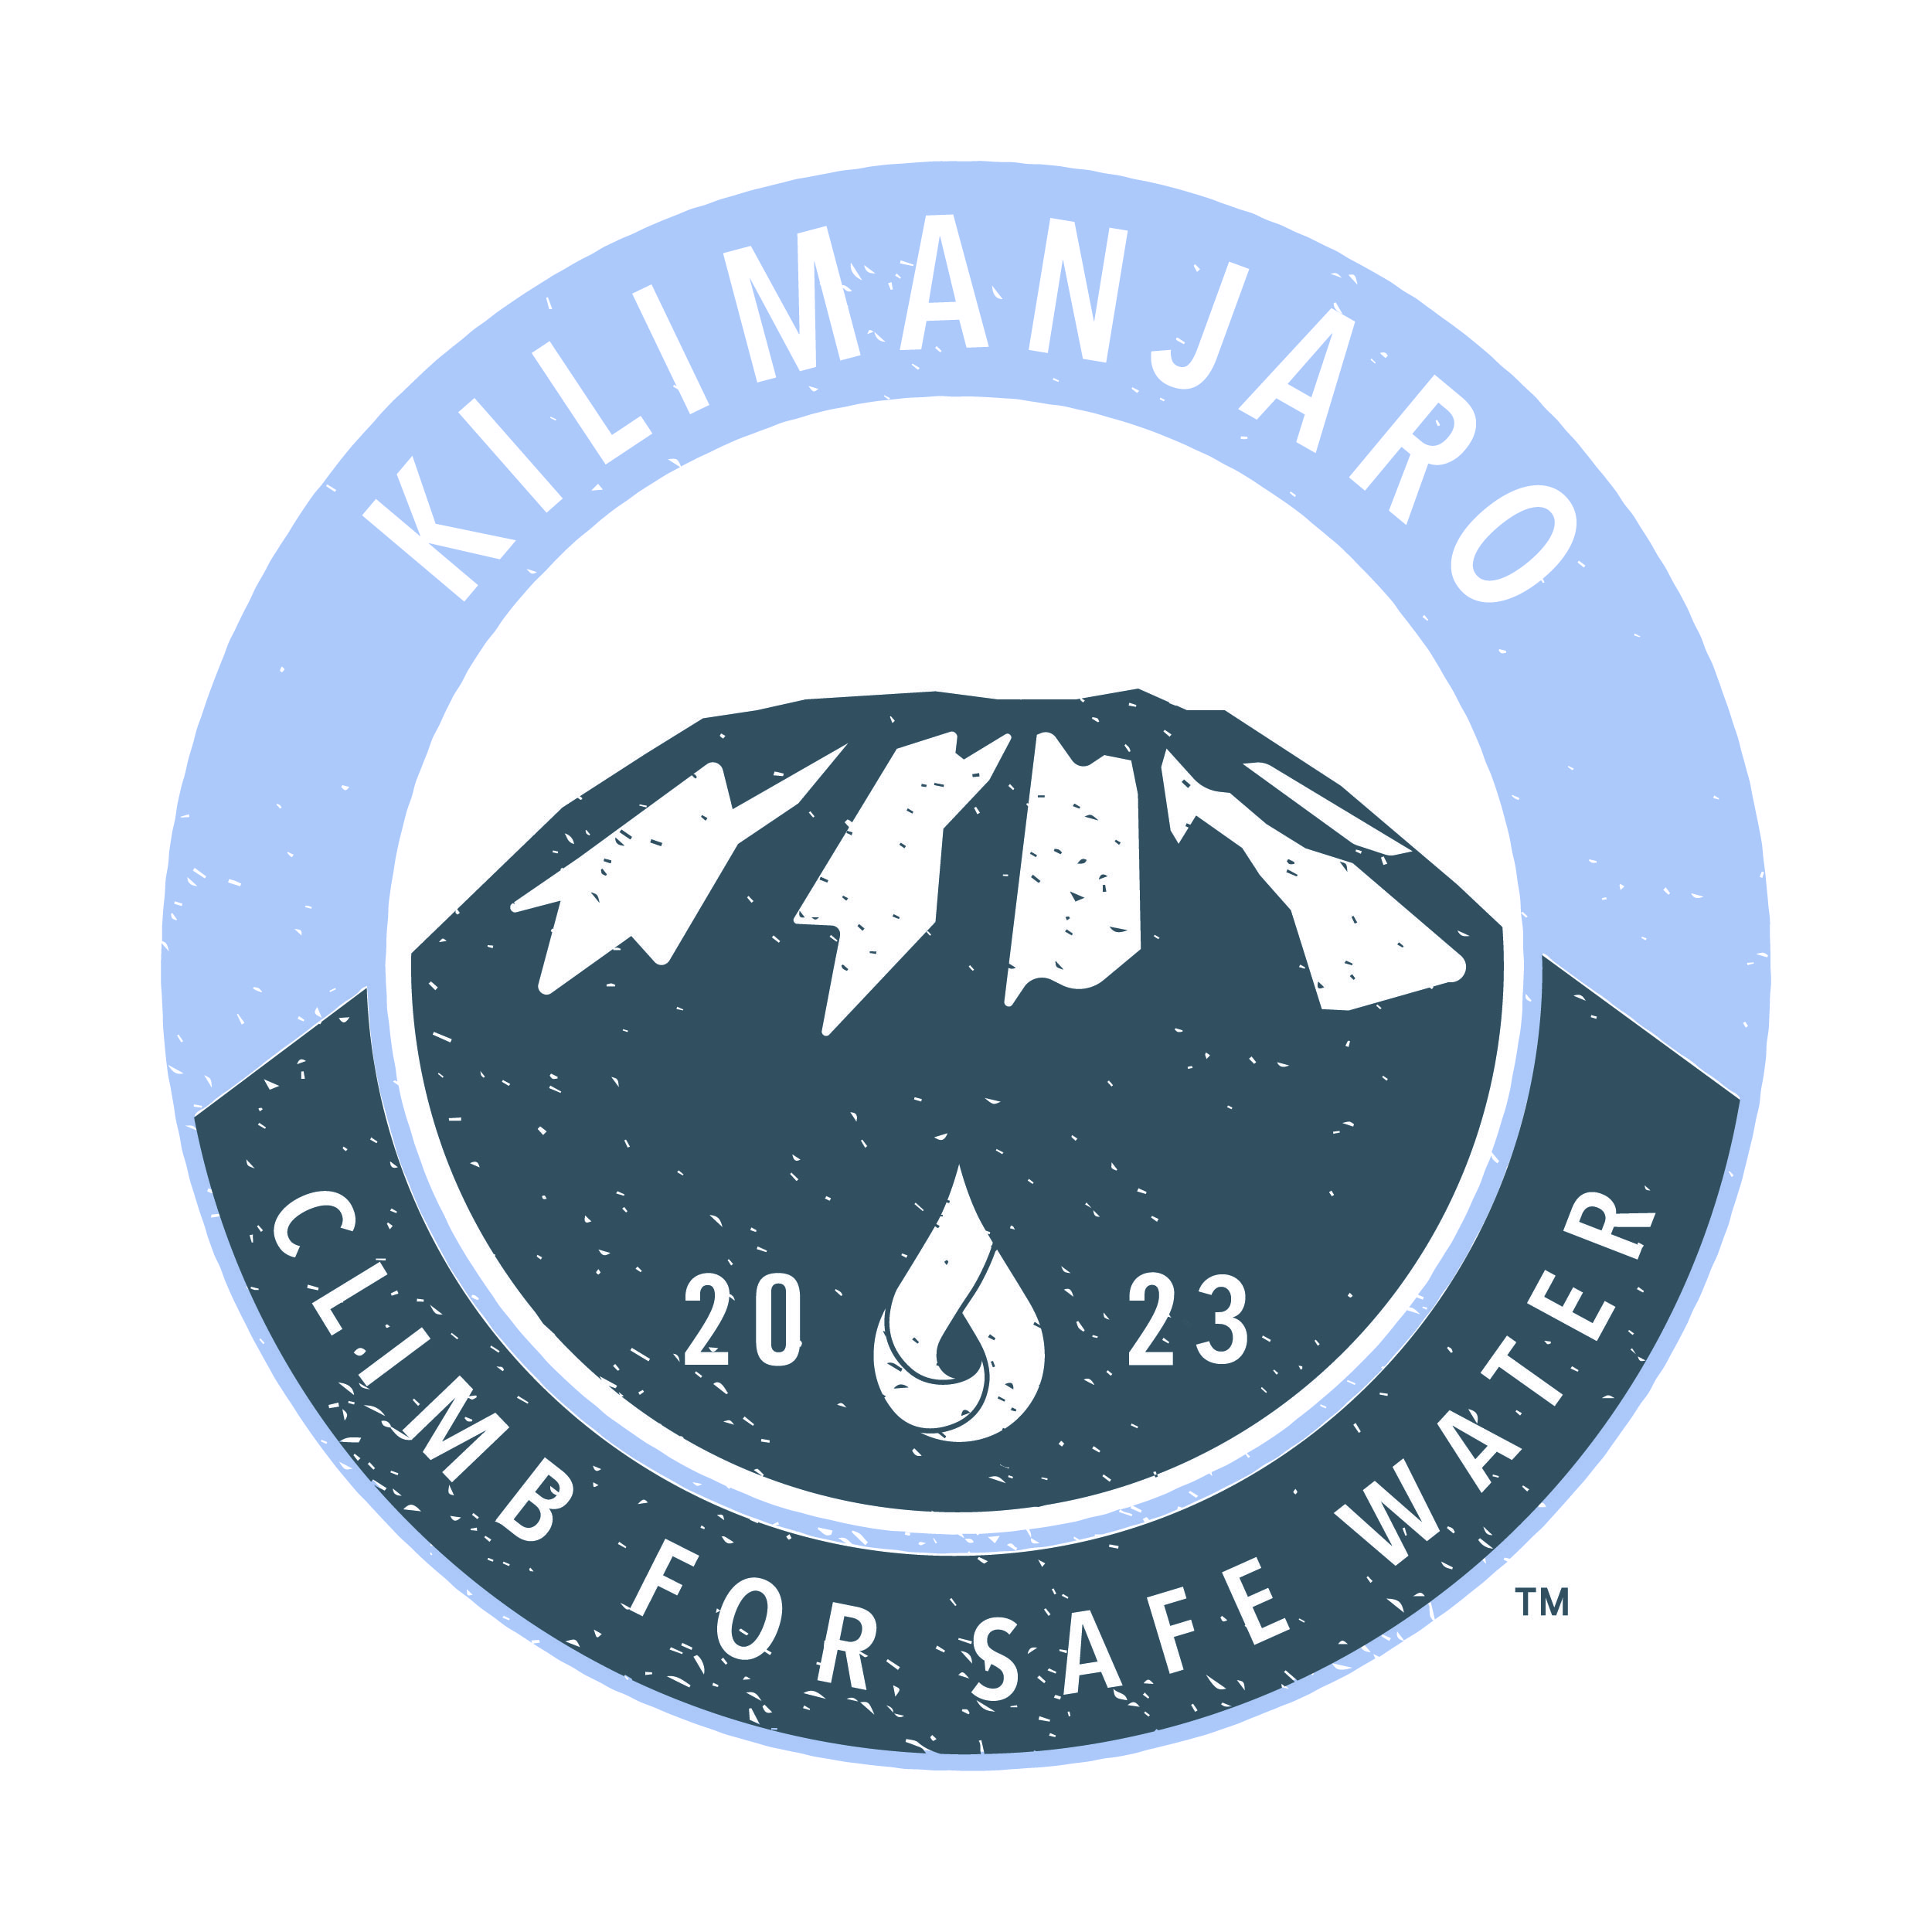 Climb Kilimanjaro for Charity